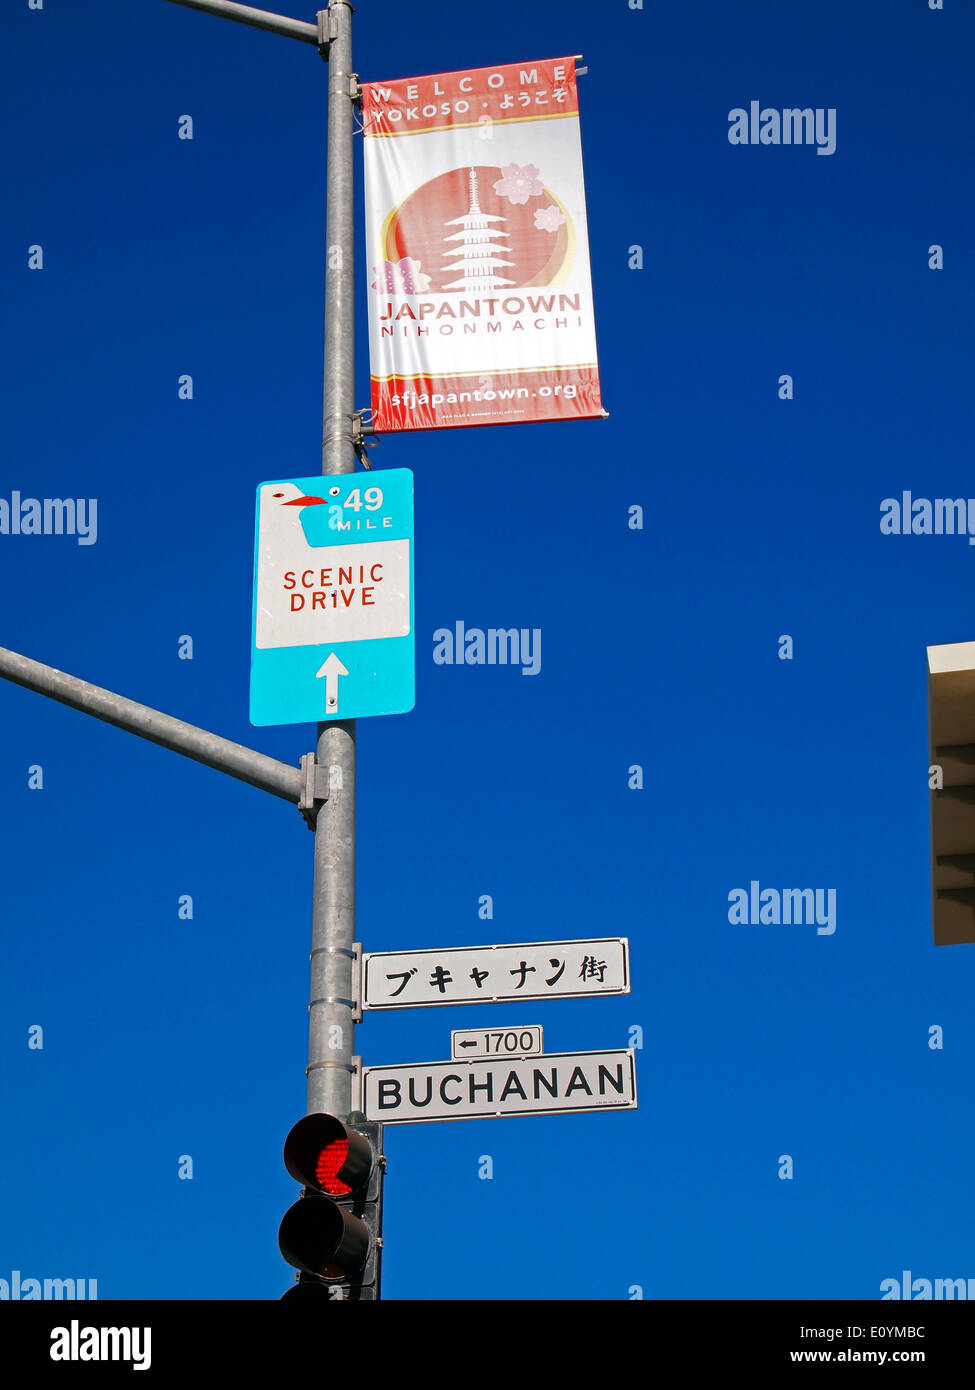 49 mile scenic drive, Buchanan Street signs, Japantown Banner, San Francisco Stock Photo